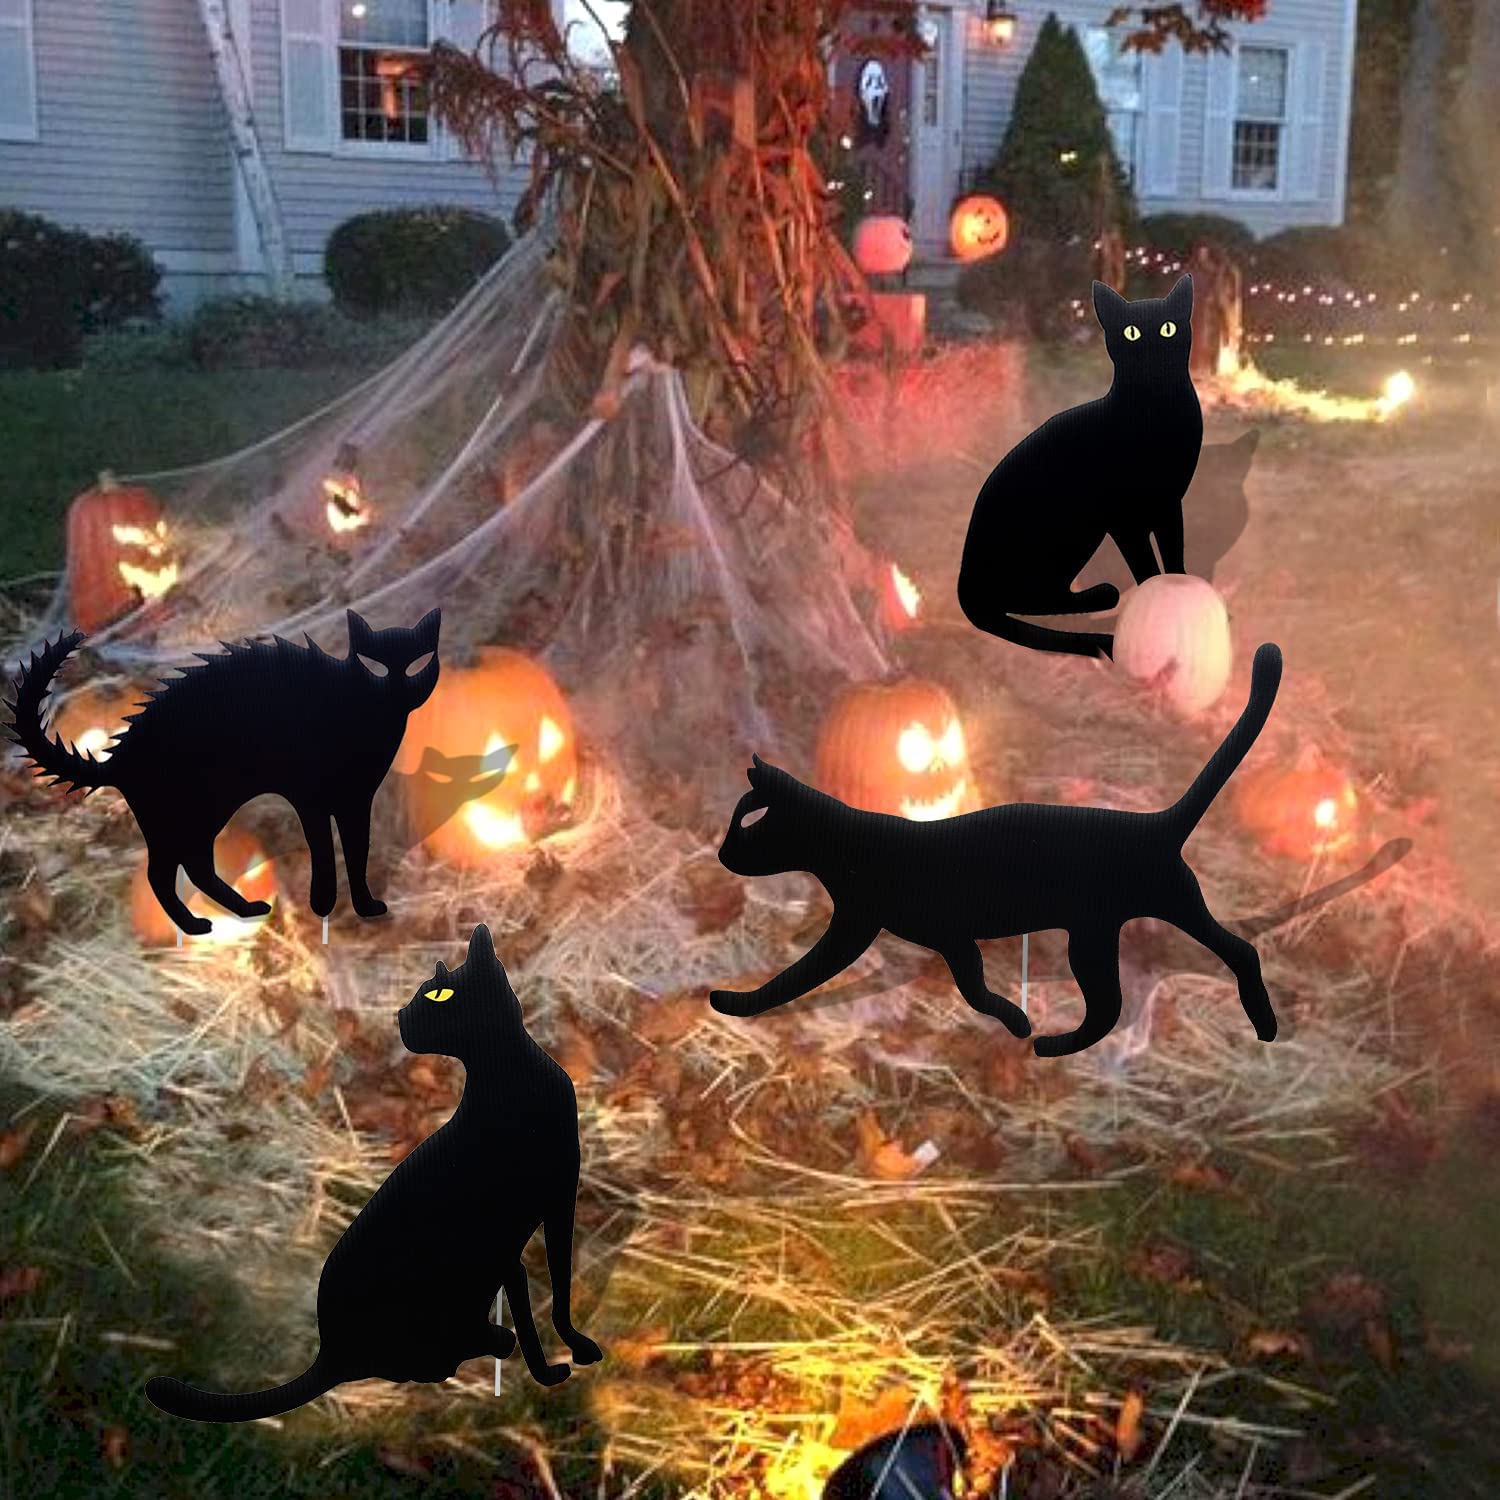 A black cat and birds - Halloween decor ideas